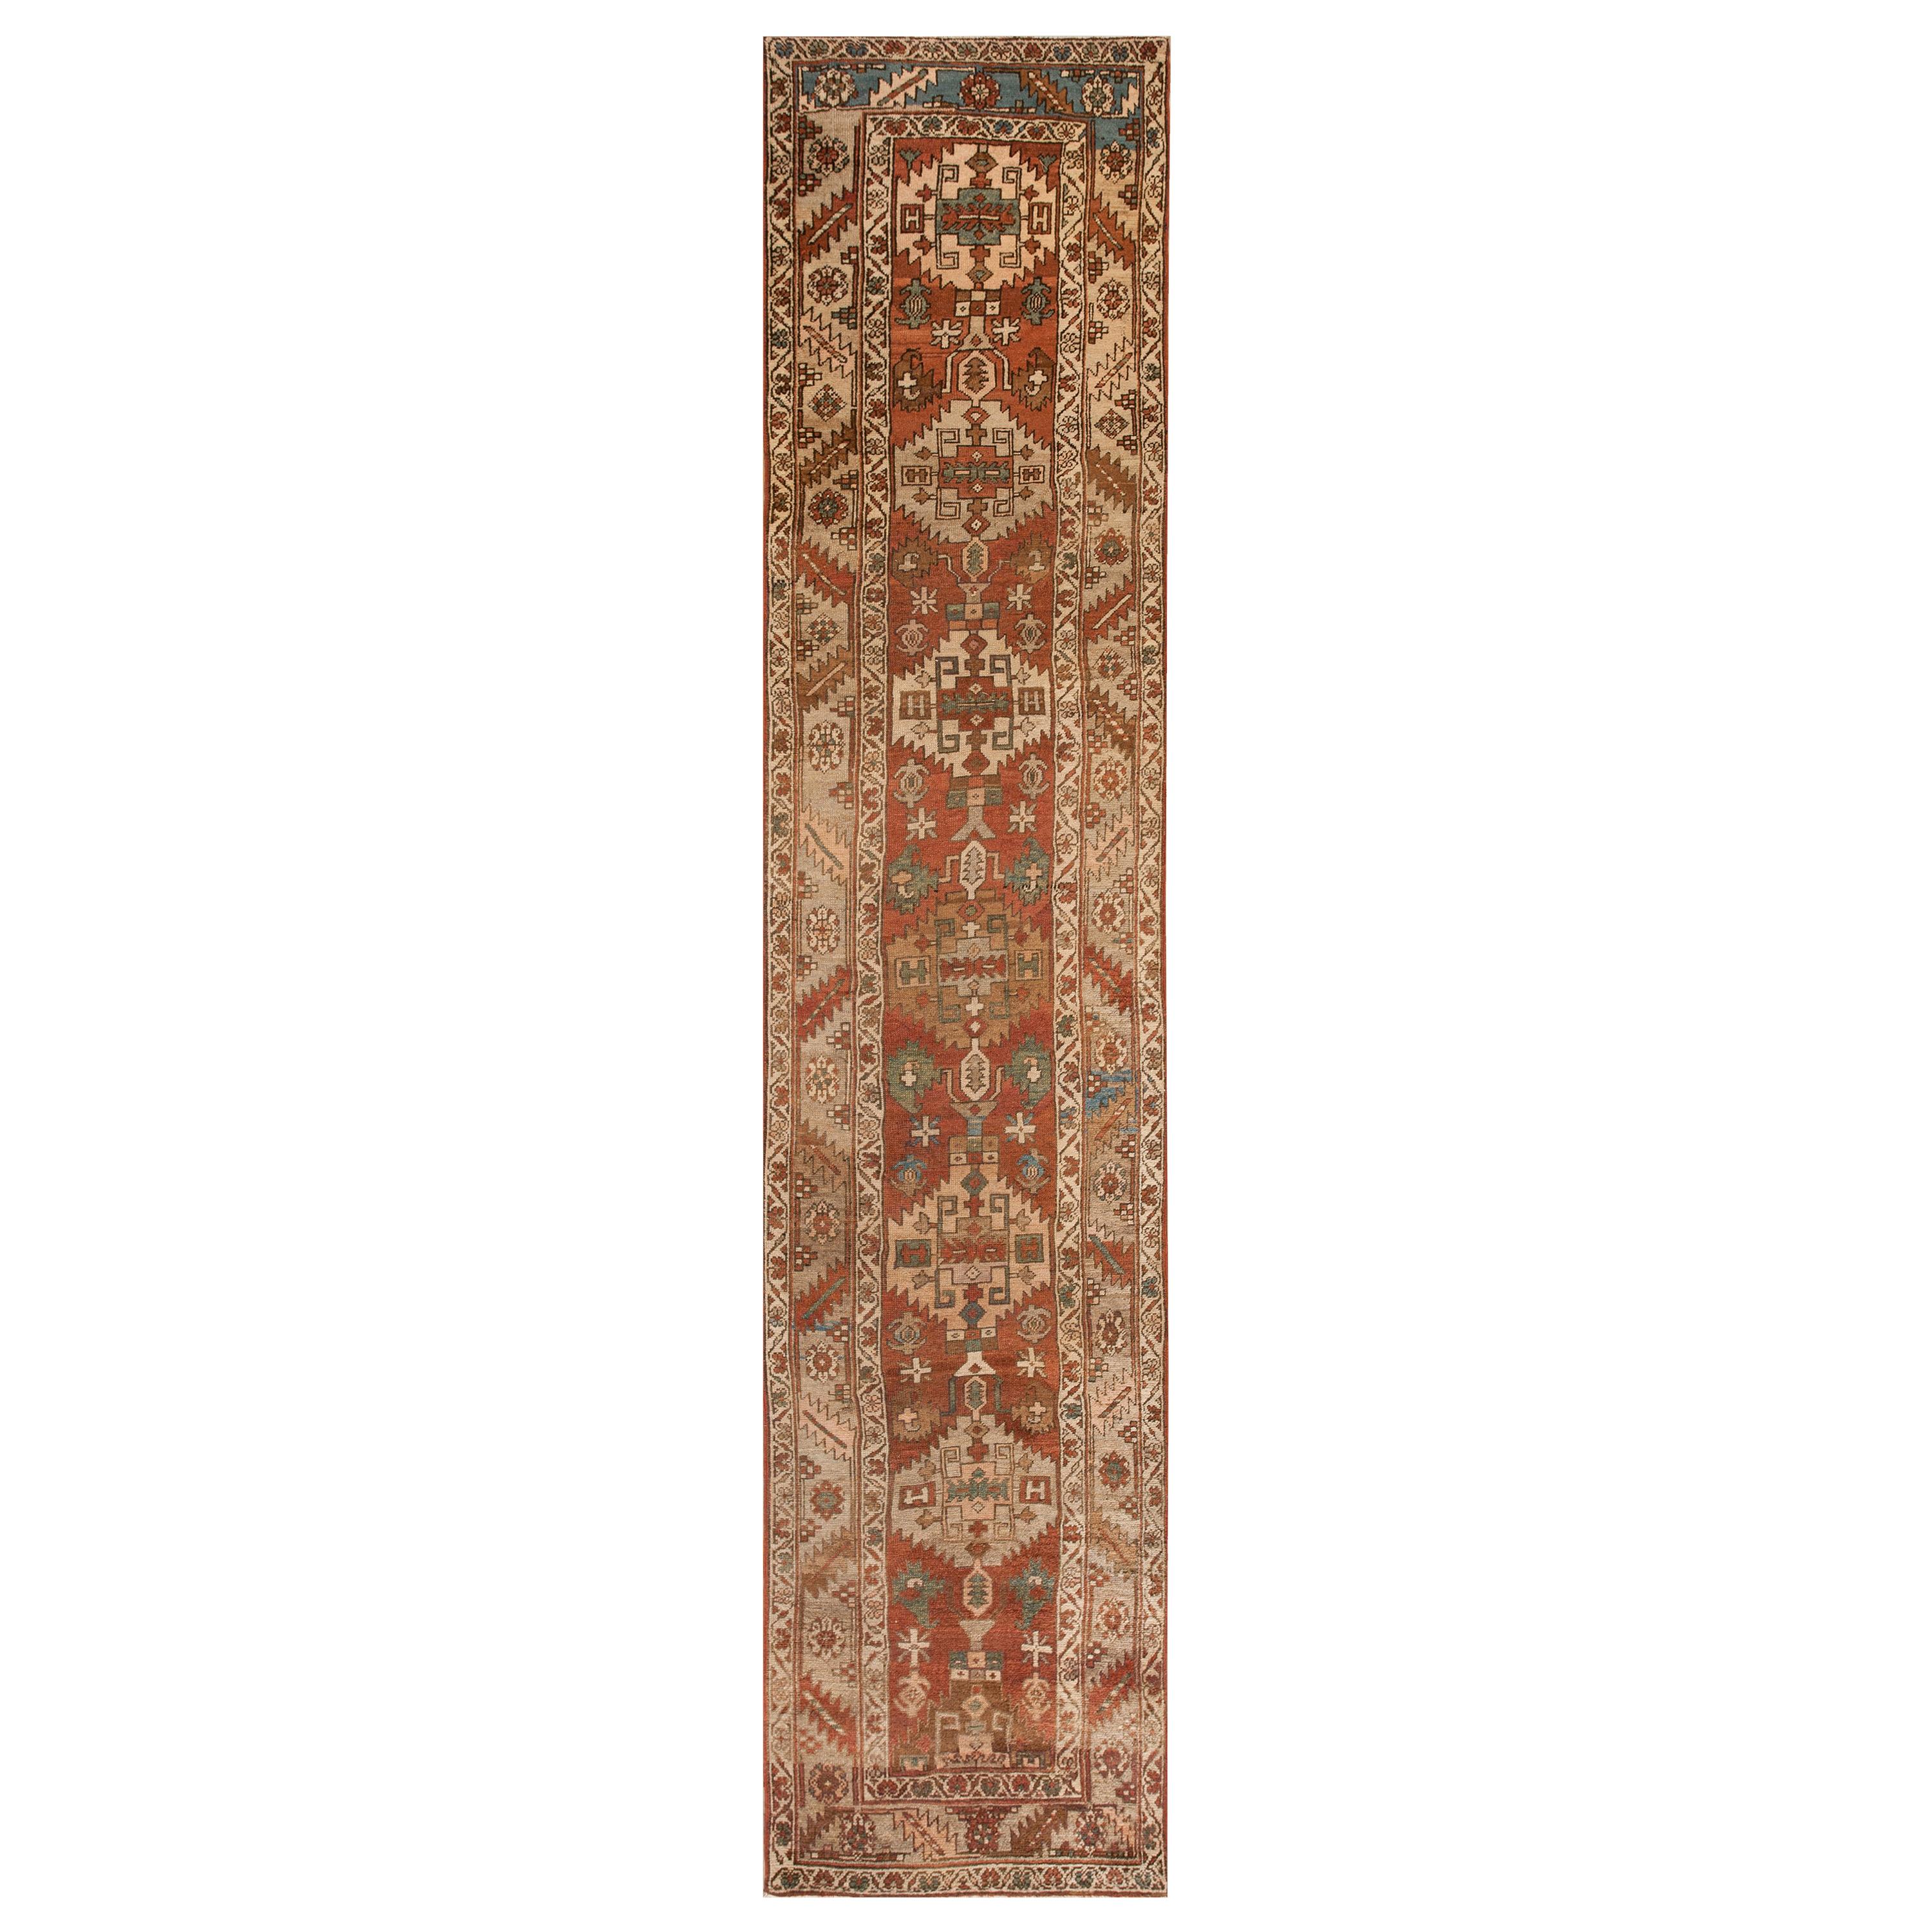 Late 19th Century N.W. Persian Serapi Carpet ( 3'2" x 13'10" - 97 x 442 )